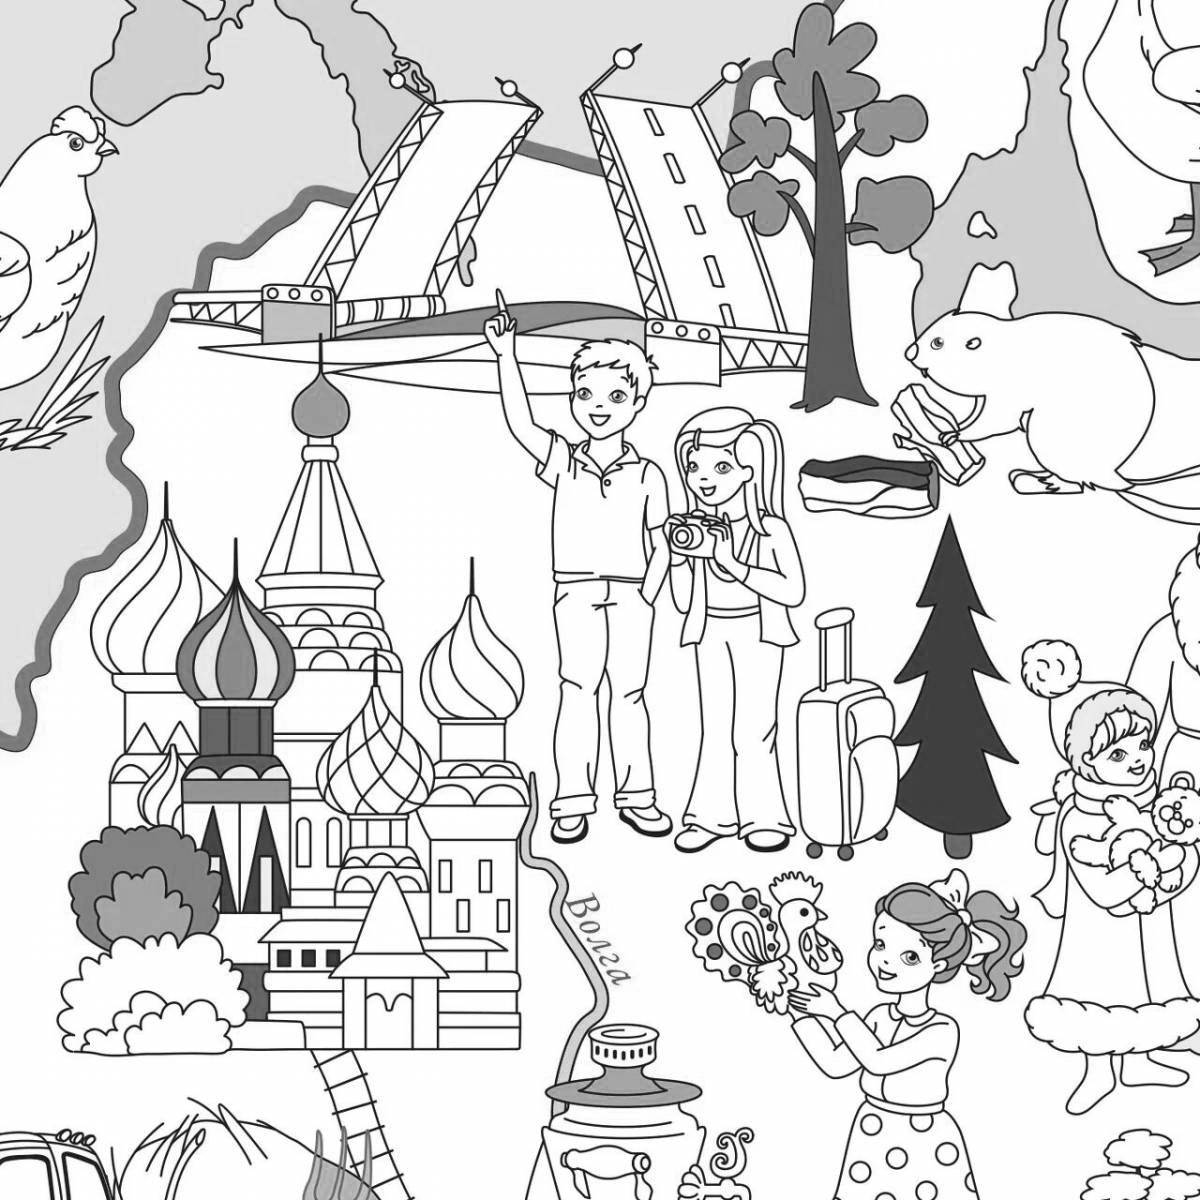 Delightful coloring Russia my homeland for preschool children